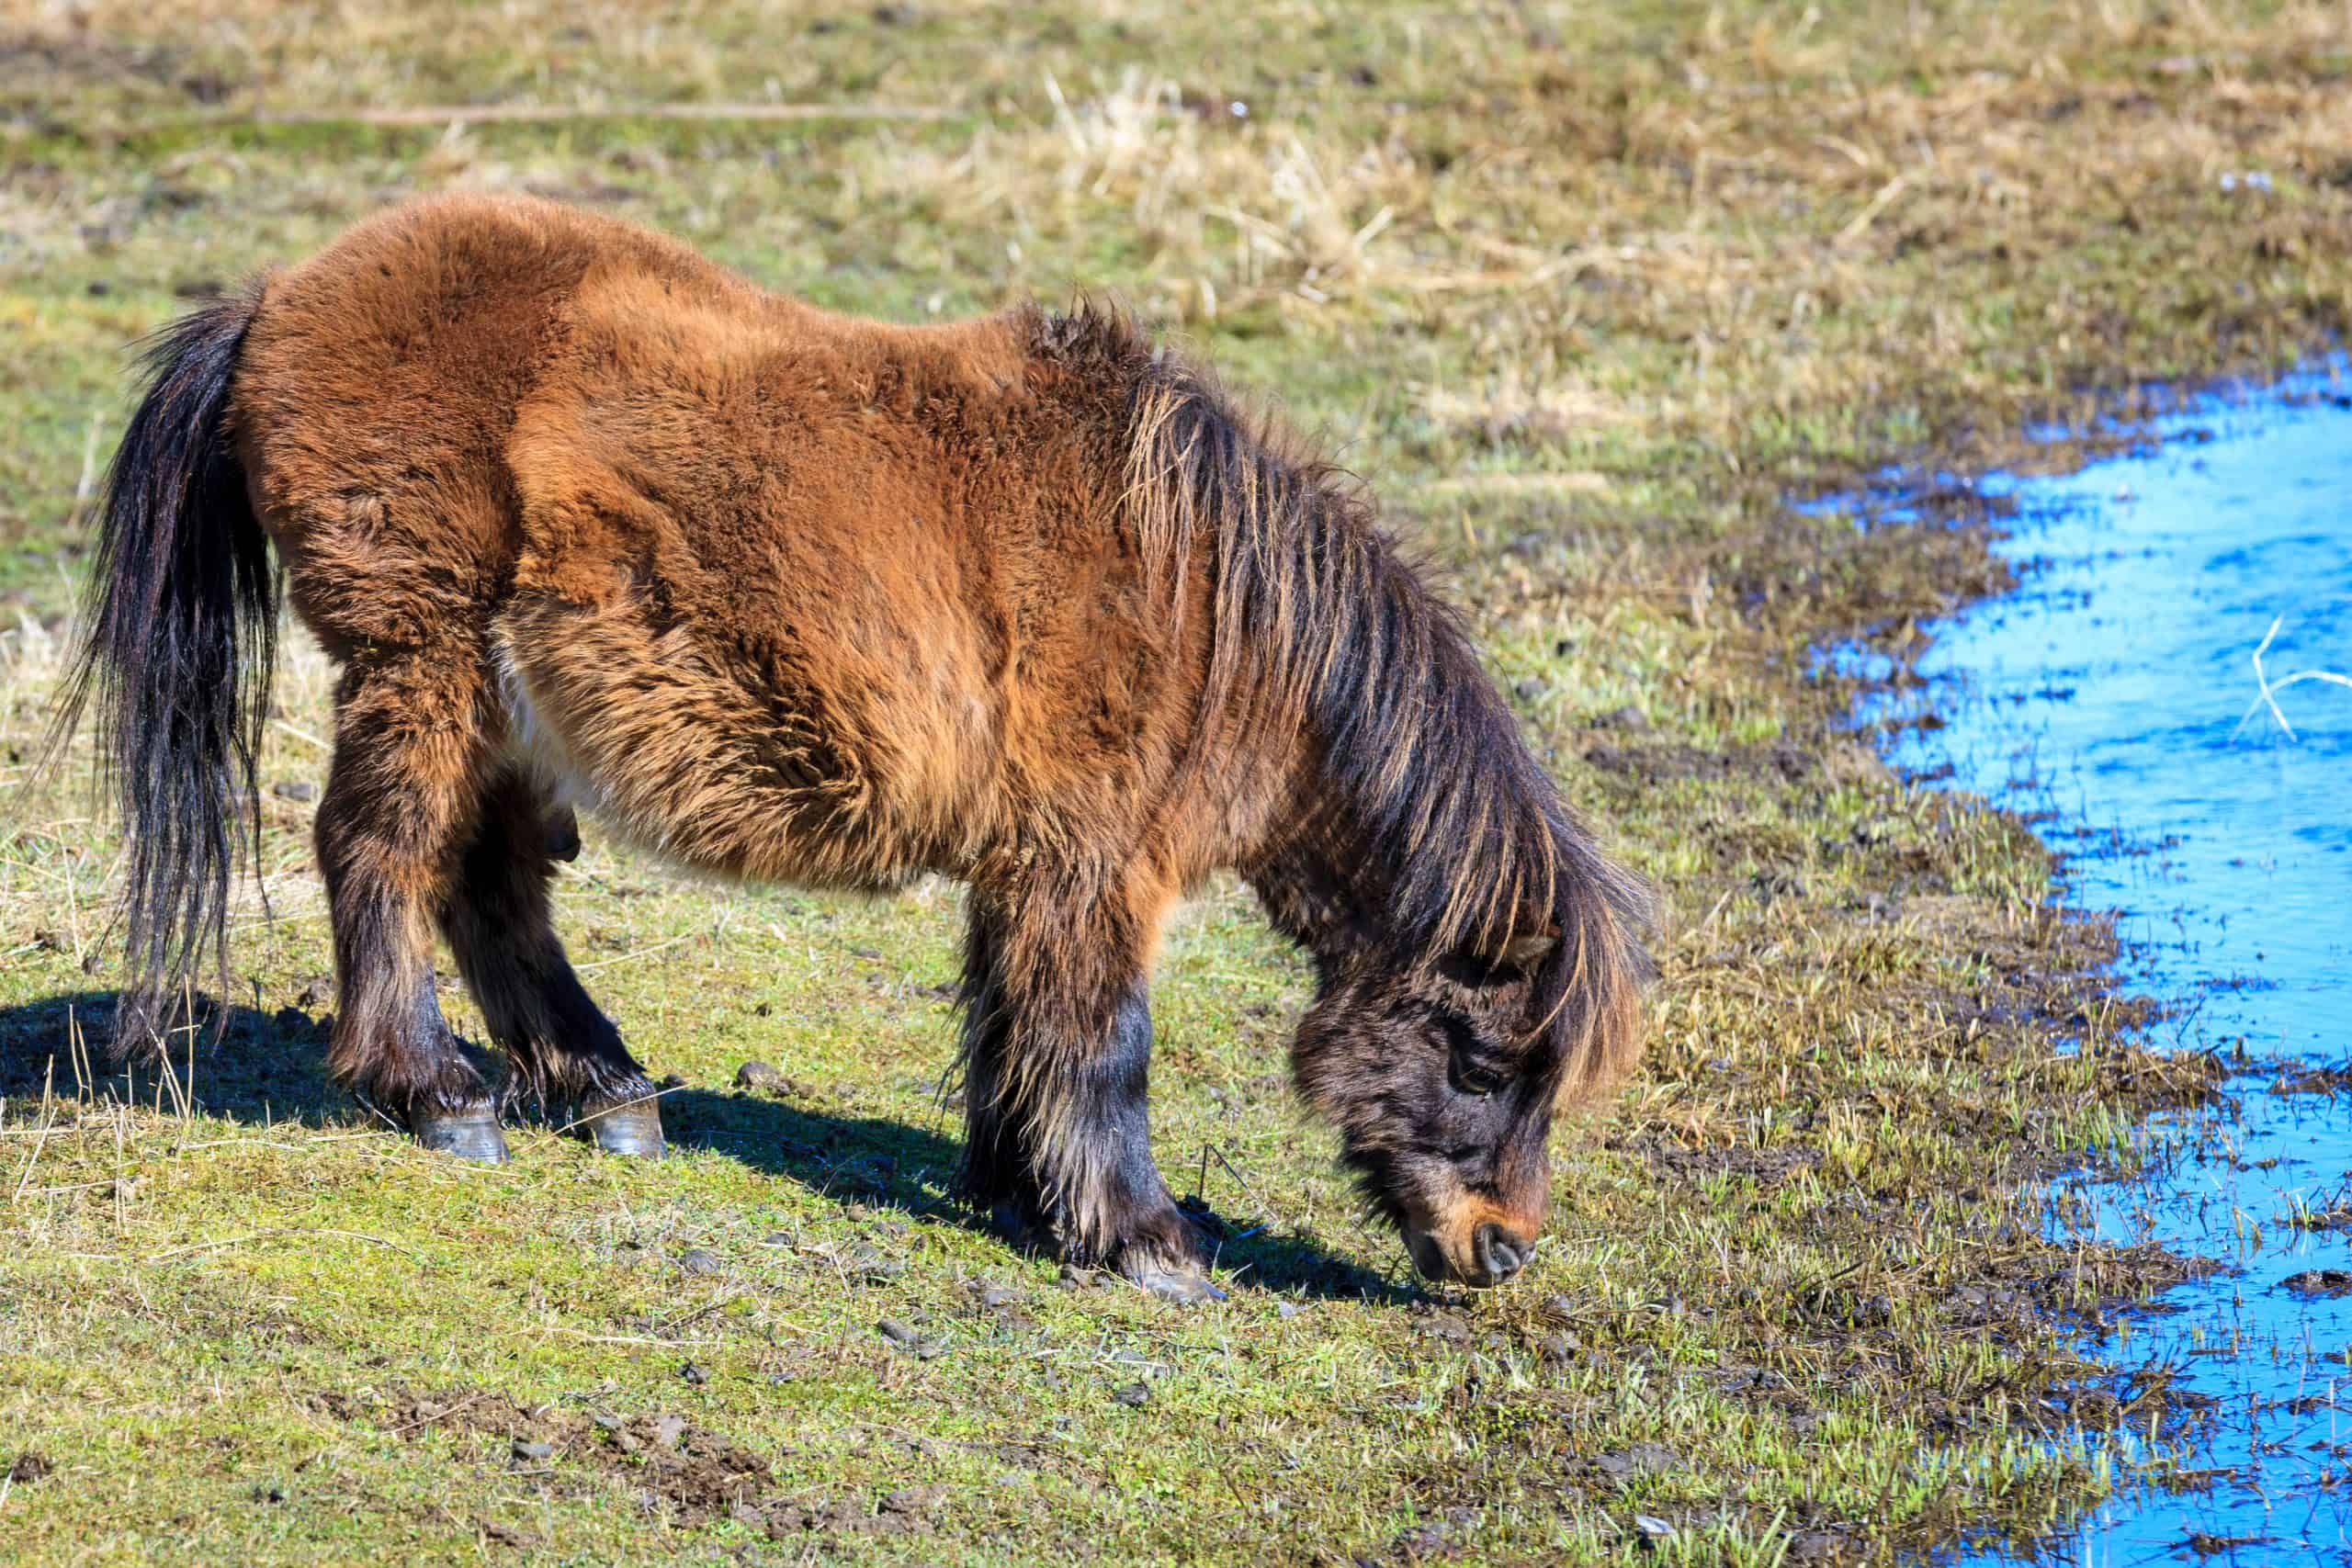 A miniature horse grazes on grass by the stream near Harrison, Idaho.